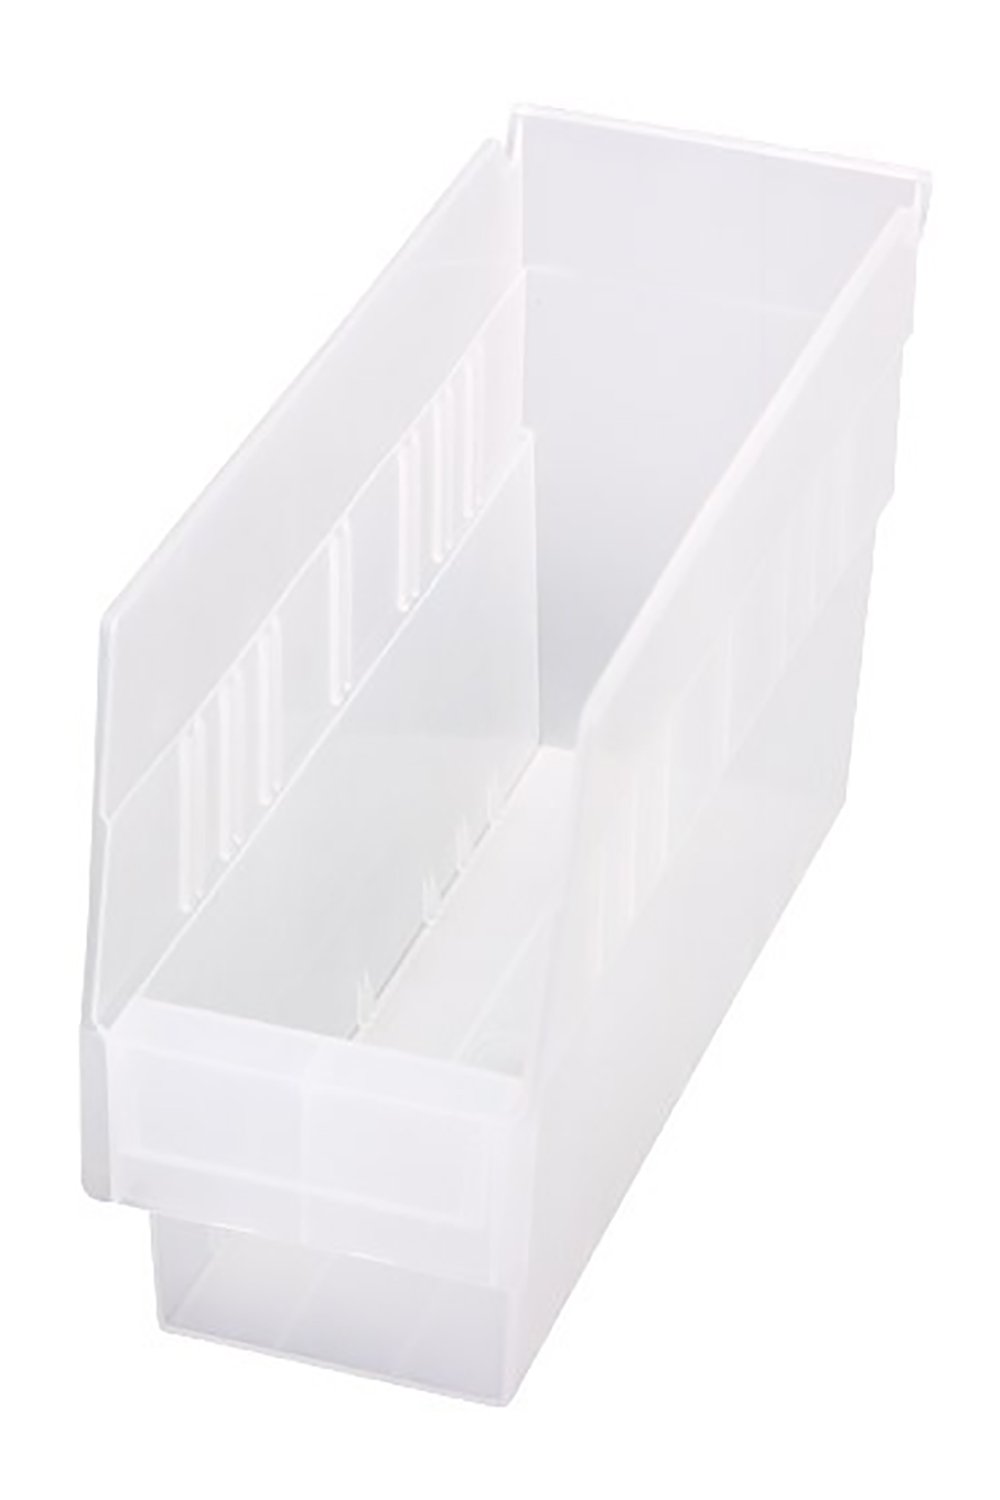 Shelf Bin for 12"D Shelves Bins & Containers Acart 11-5/8" x 4-3/8" x 6" Clear 